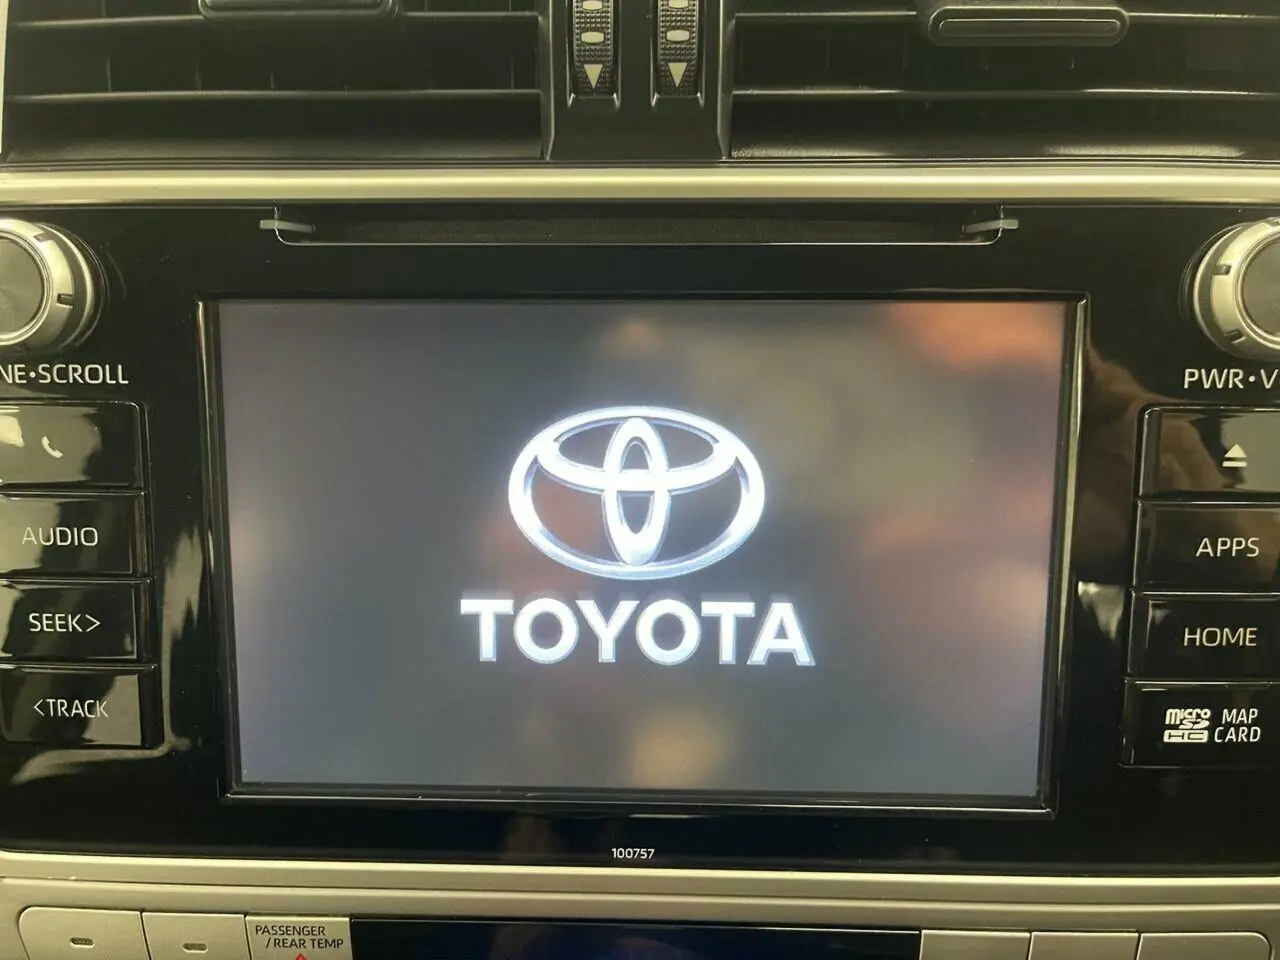 2017 Toyota Landcruiser Prado Image 16